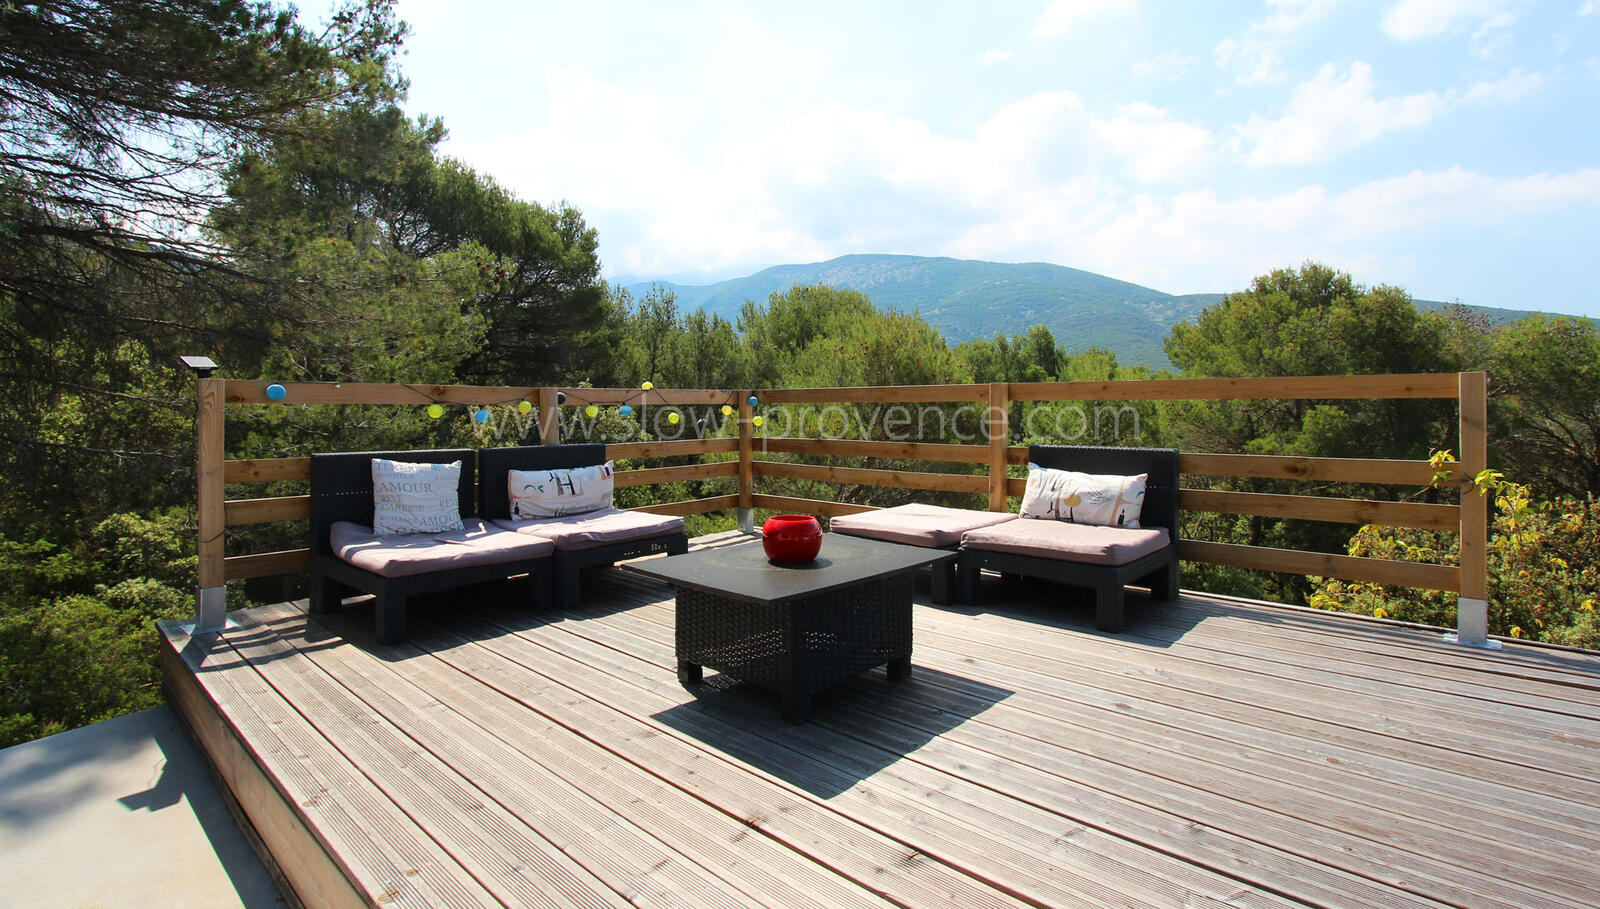 Garden furniture with Mont-Ventoux view